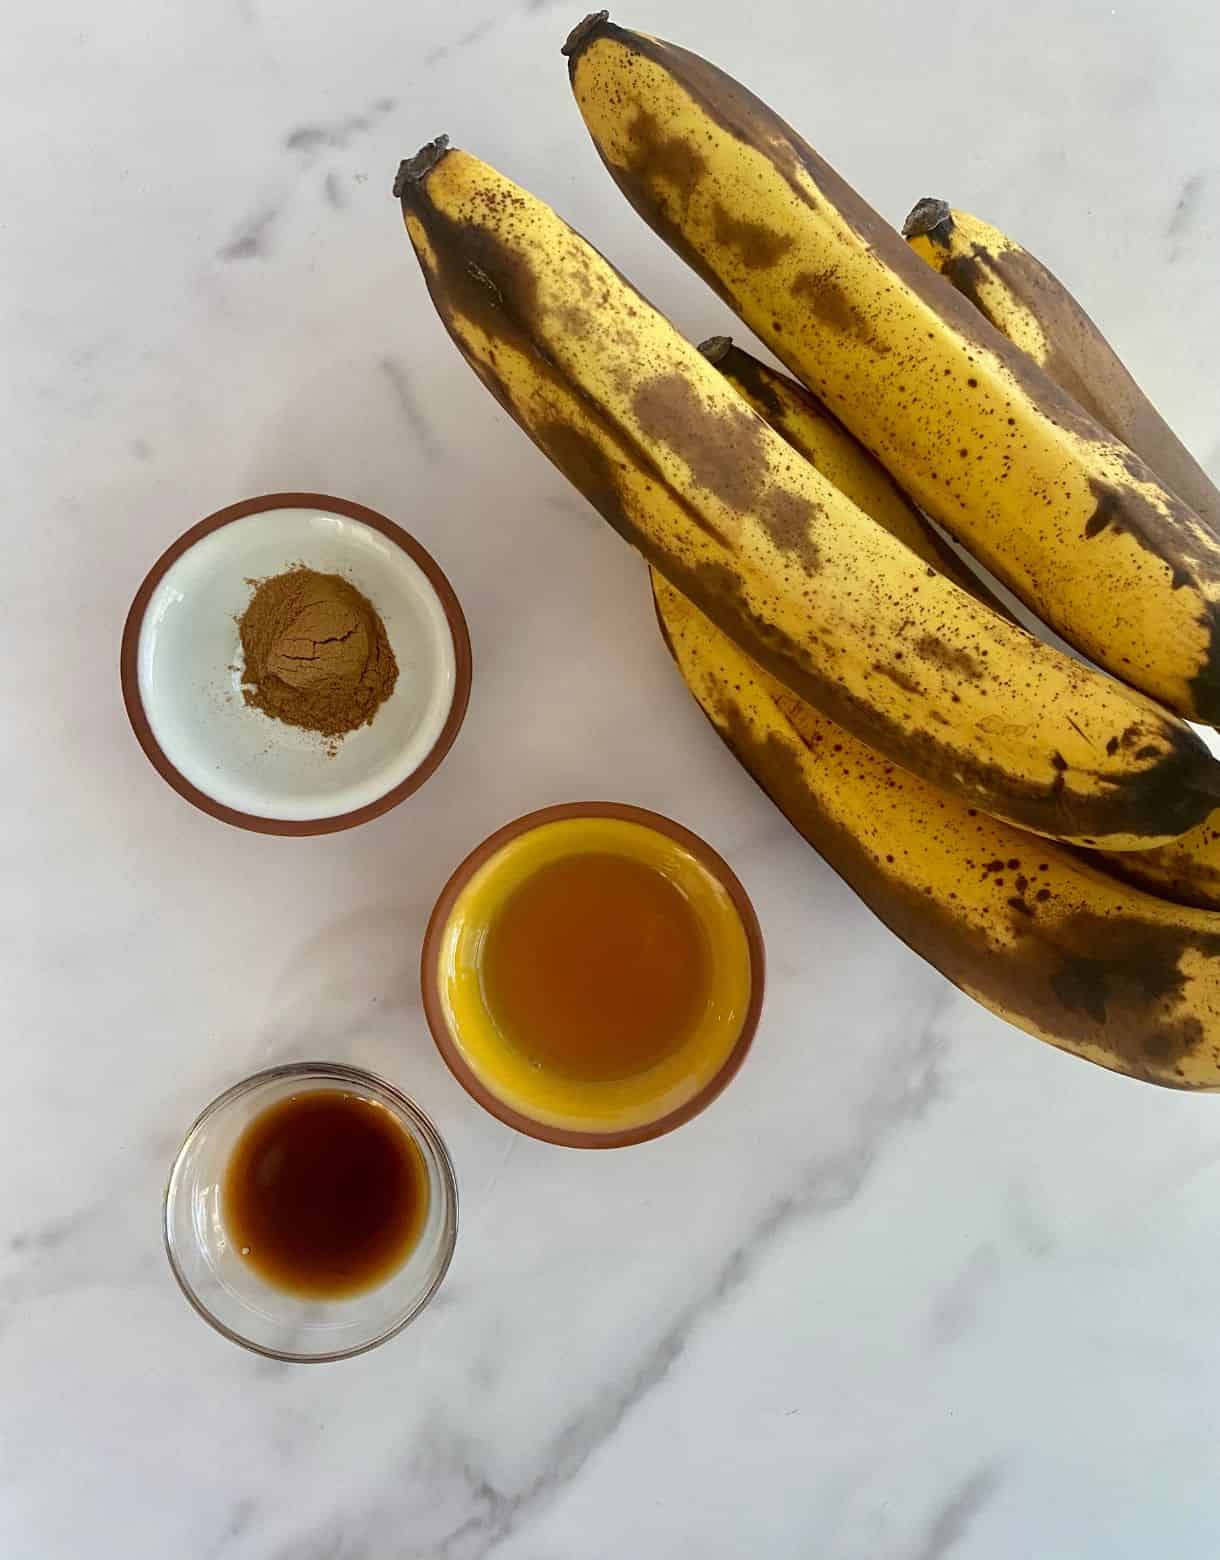 Ingredients for Healthy Bananas Foster. Bananas, bourbon, vanilla extract and cinnamon.